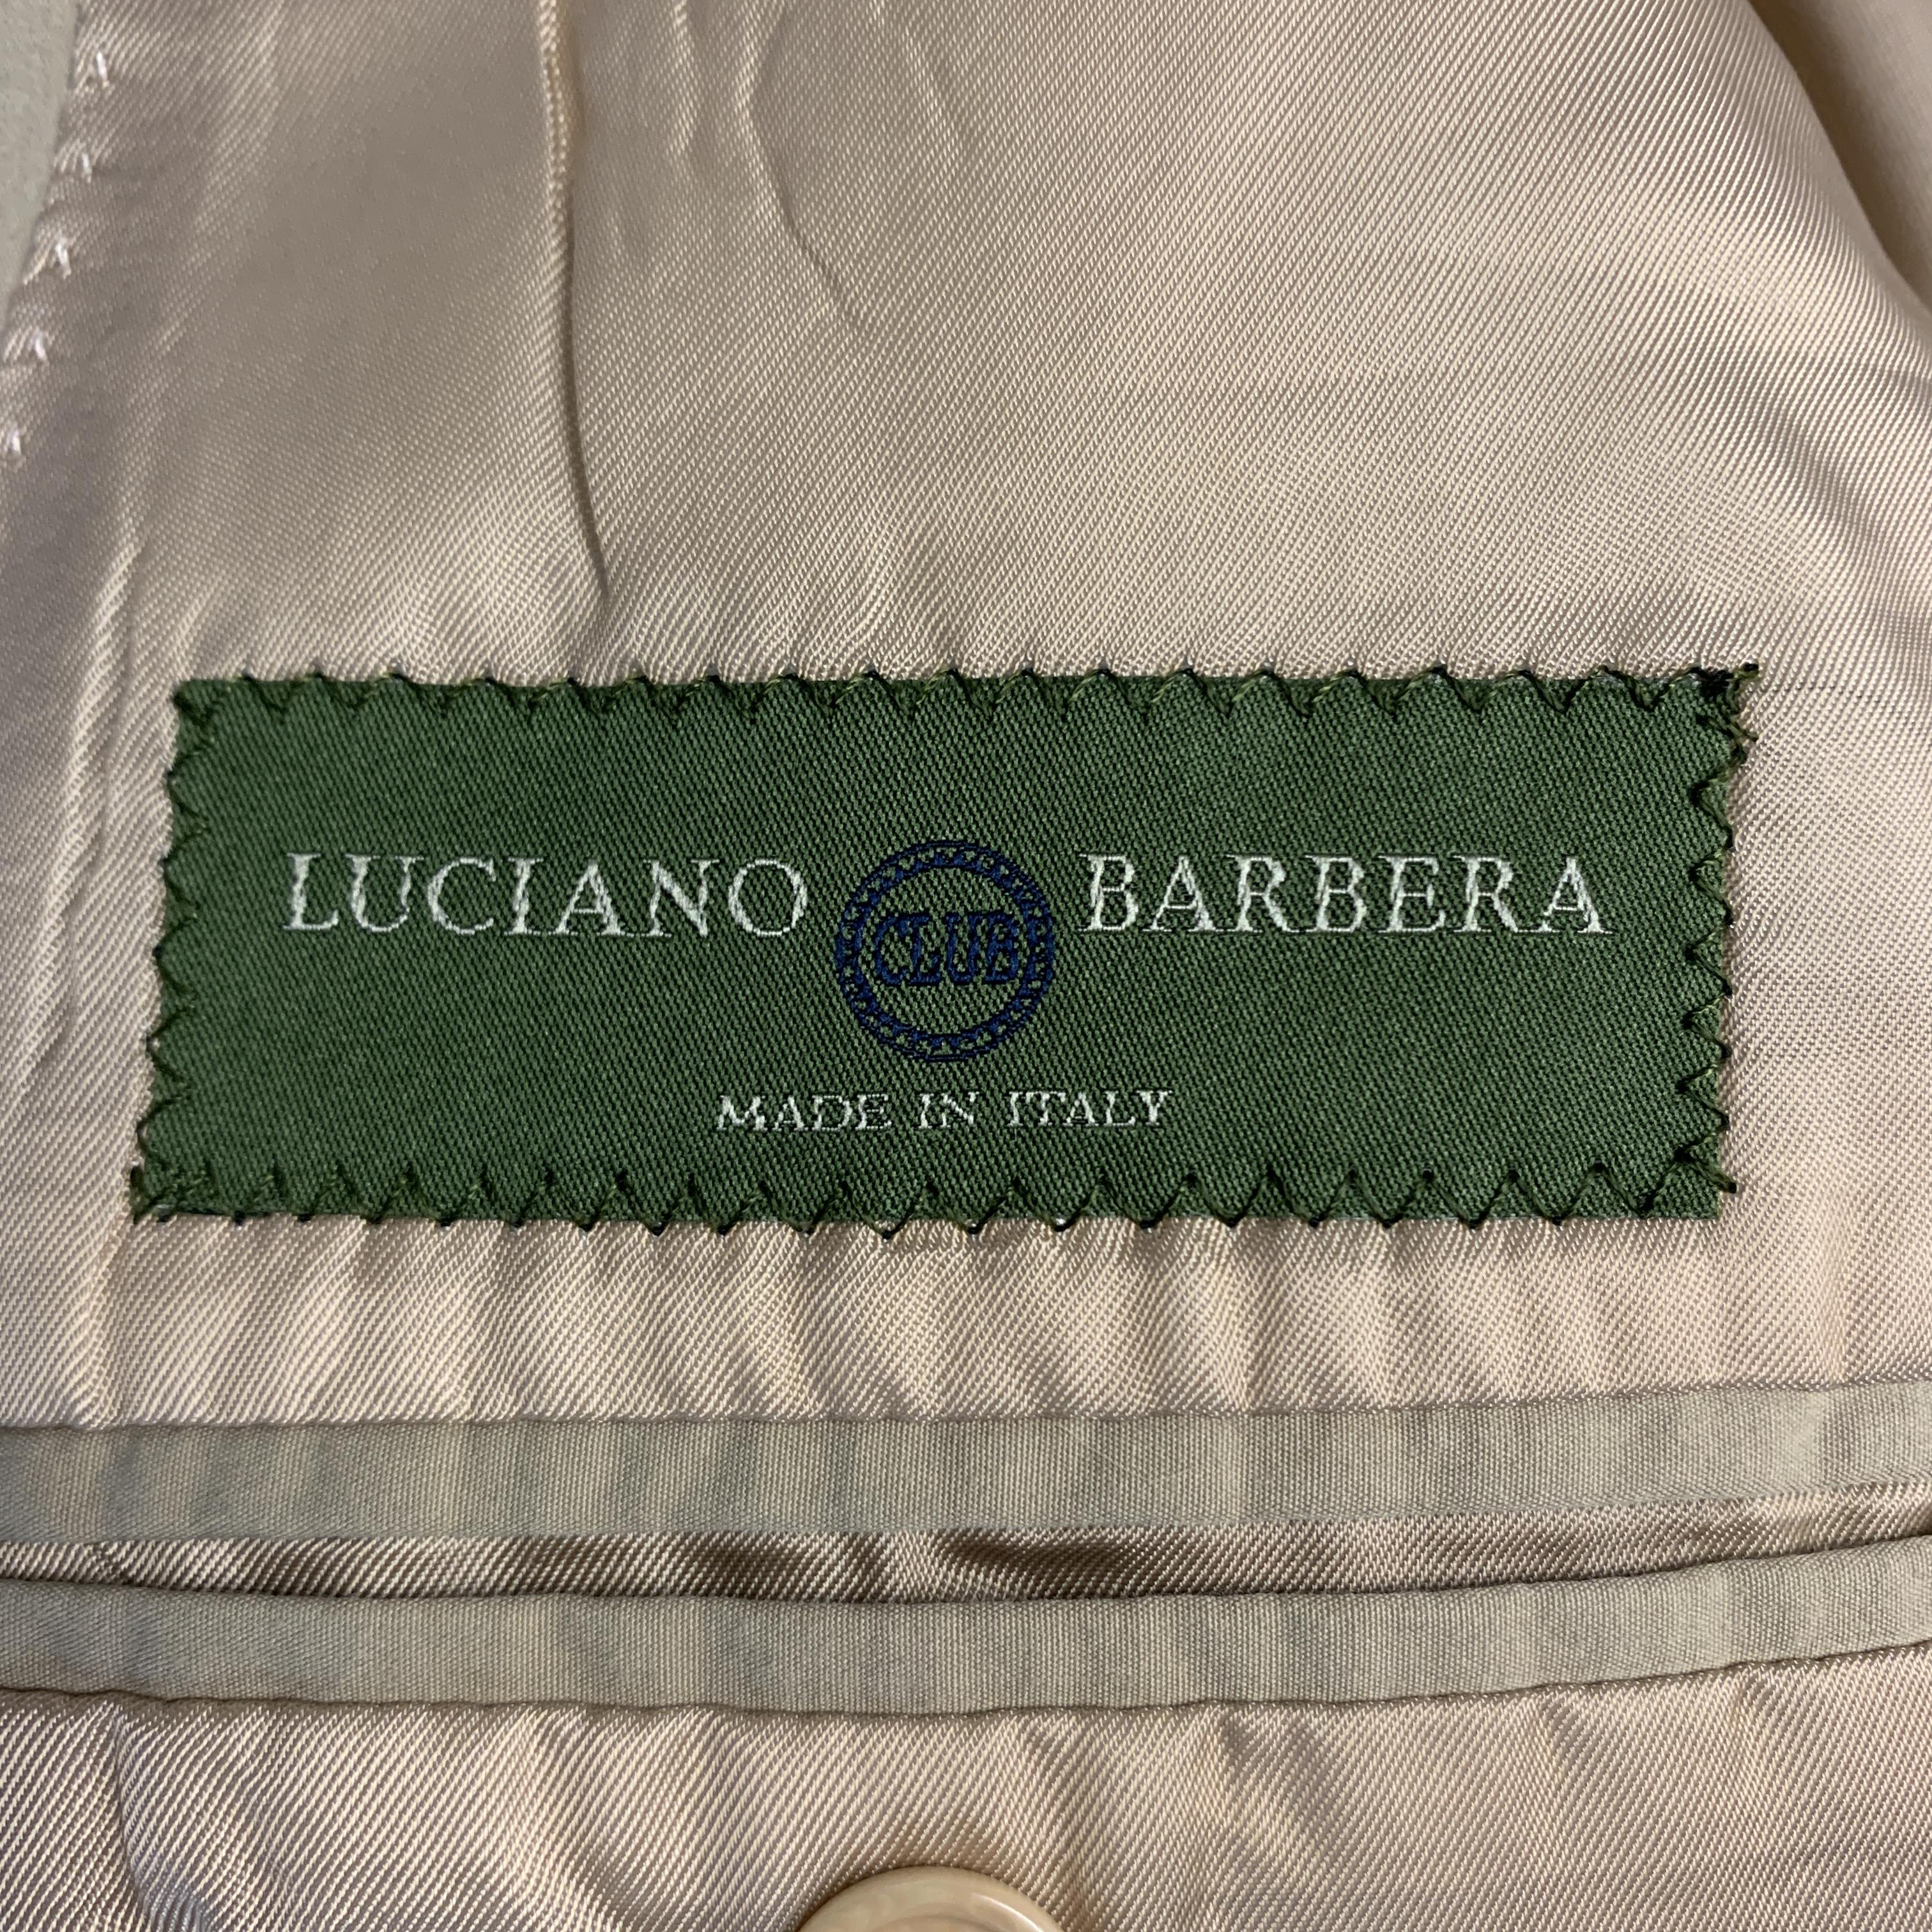 Men's LUCIANO BARBERA 38 Regular Khaki Cotton Suit